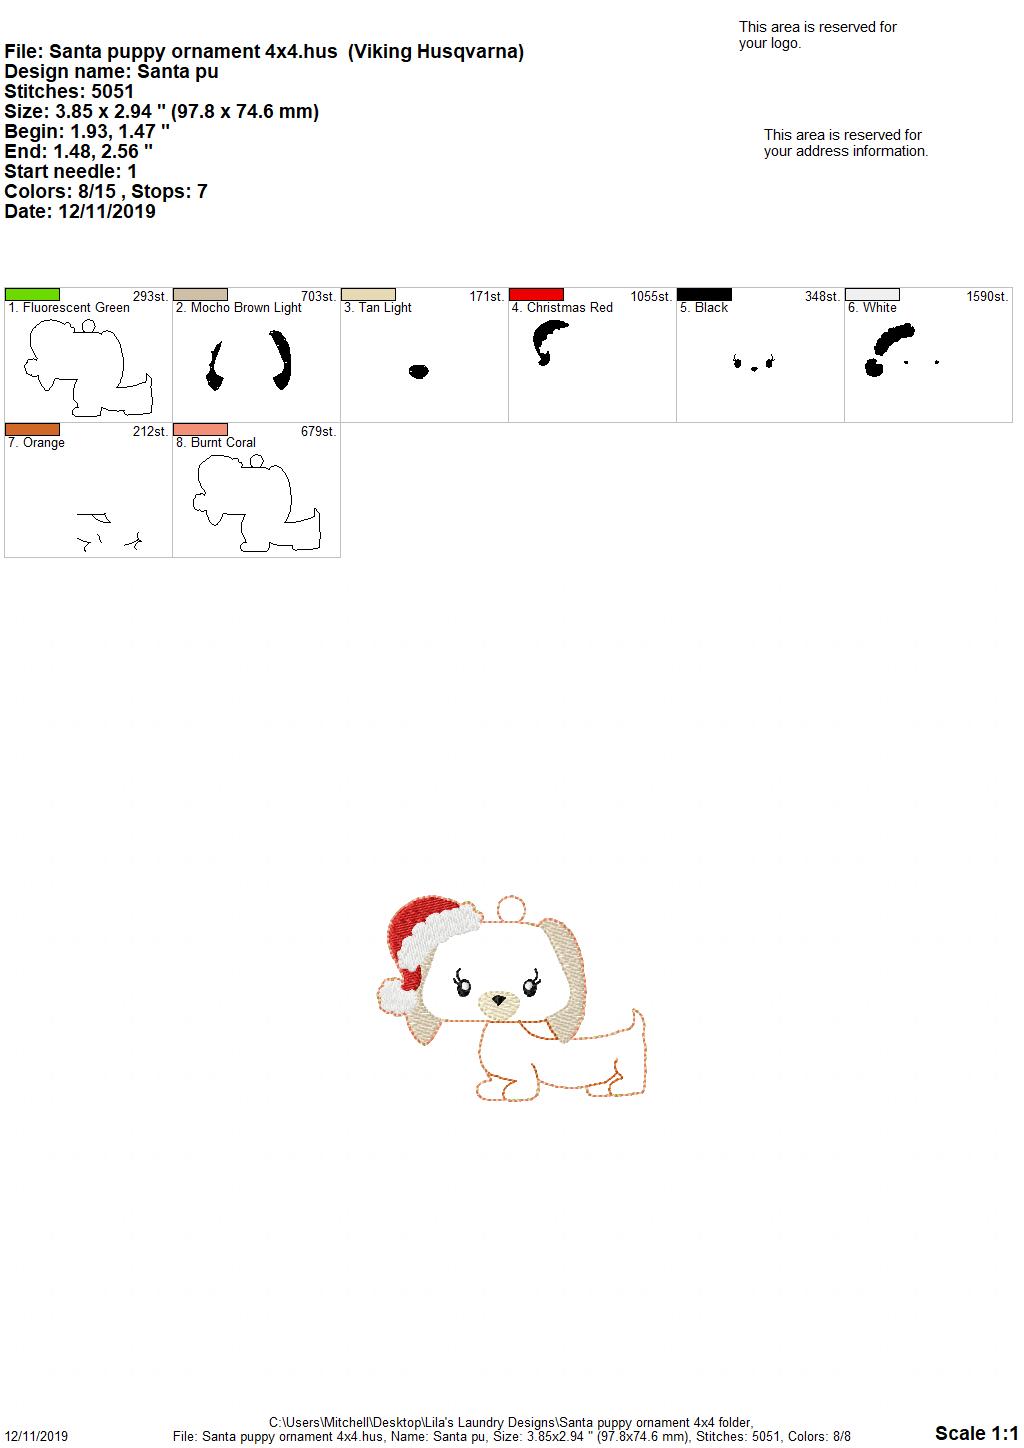 Santa Puppy Ornament - Digital Embroidery Design